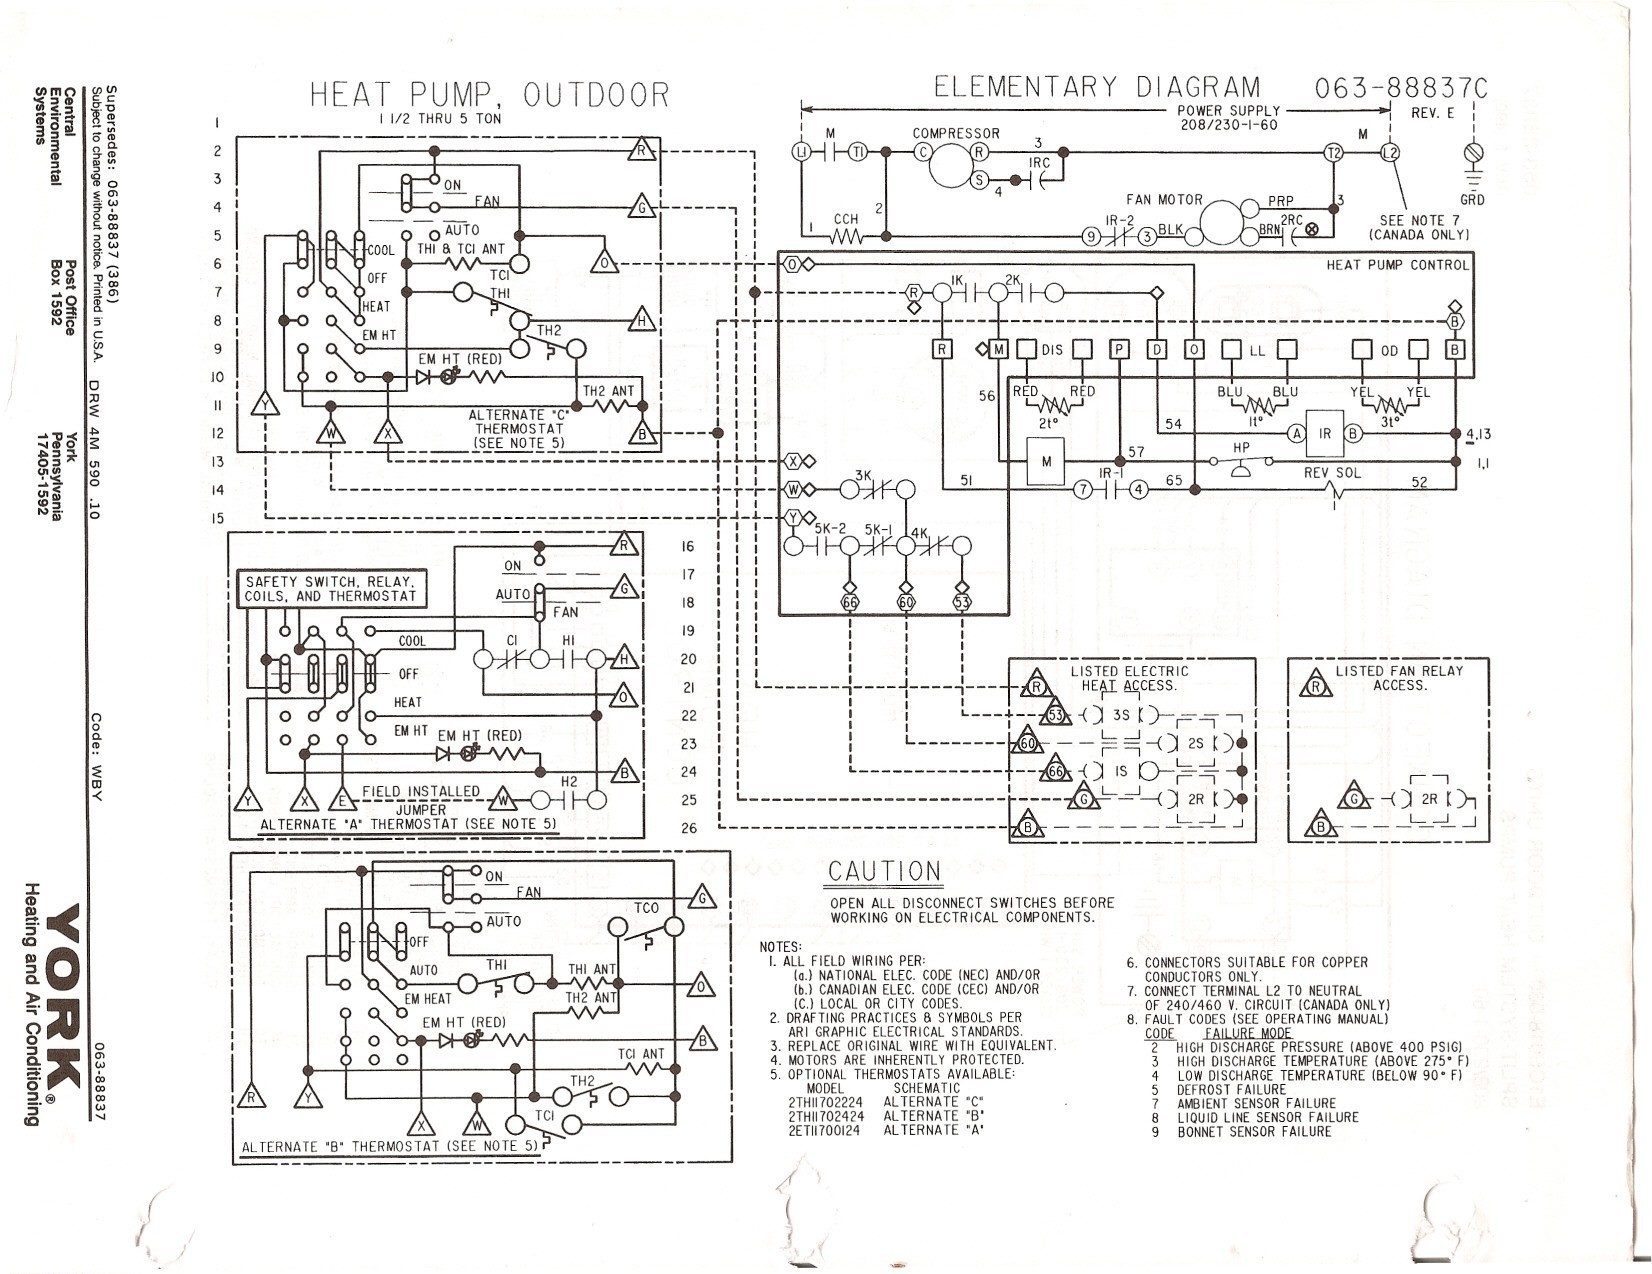 electric heat strip wiring diagram Collection Wiring Diagram Carrier Air Conditioner Fresh Bryant Heat Pump DOWNLOAD Wiring Diagram